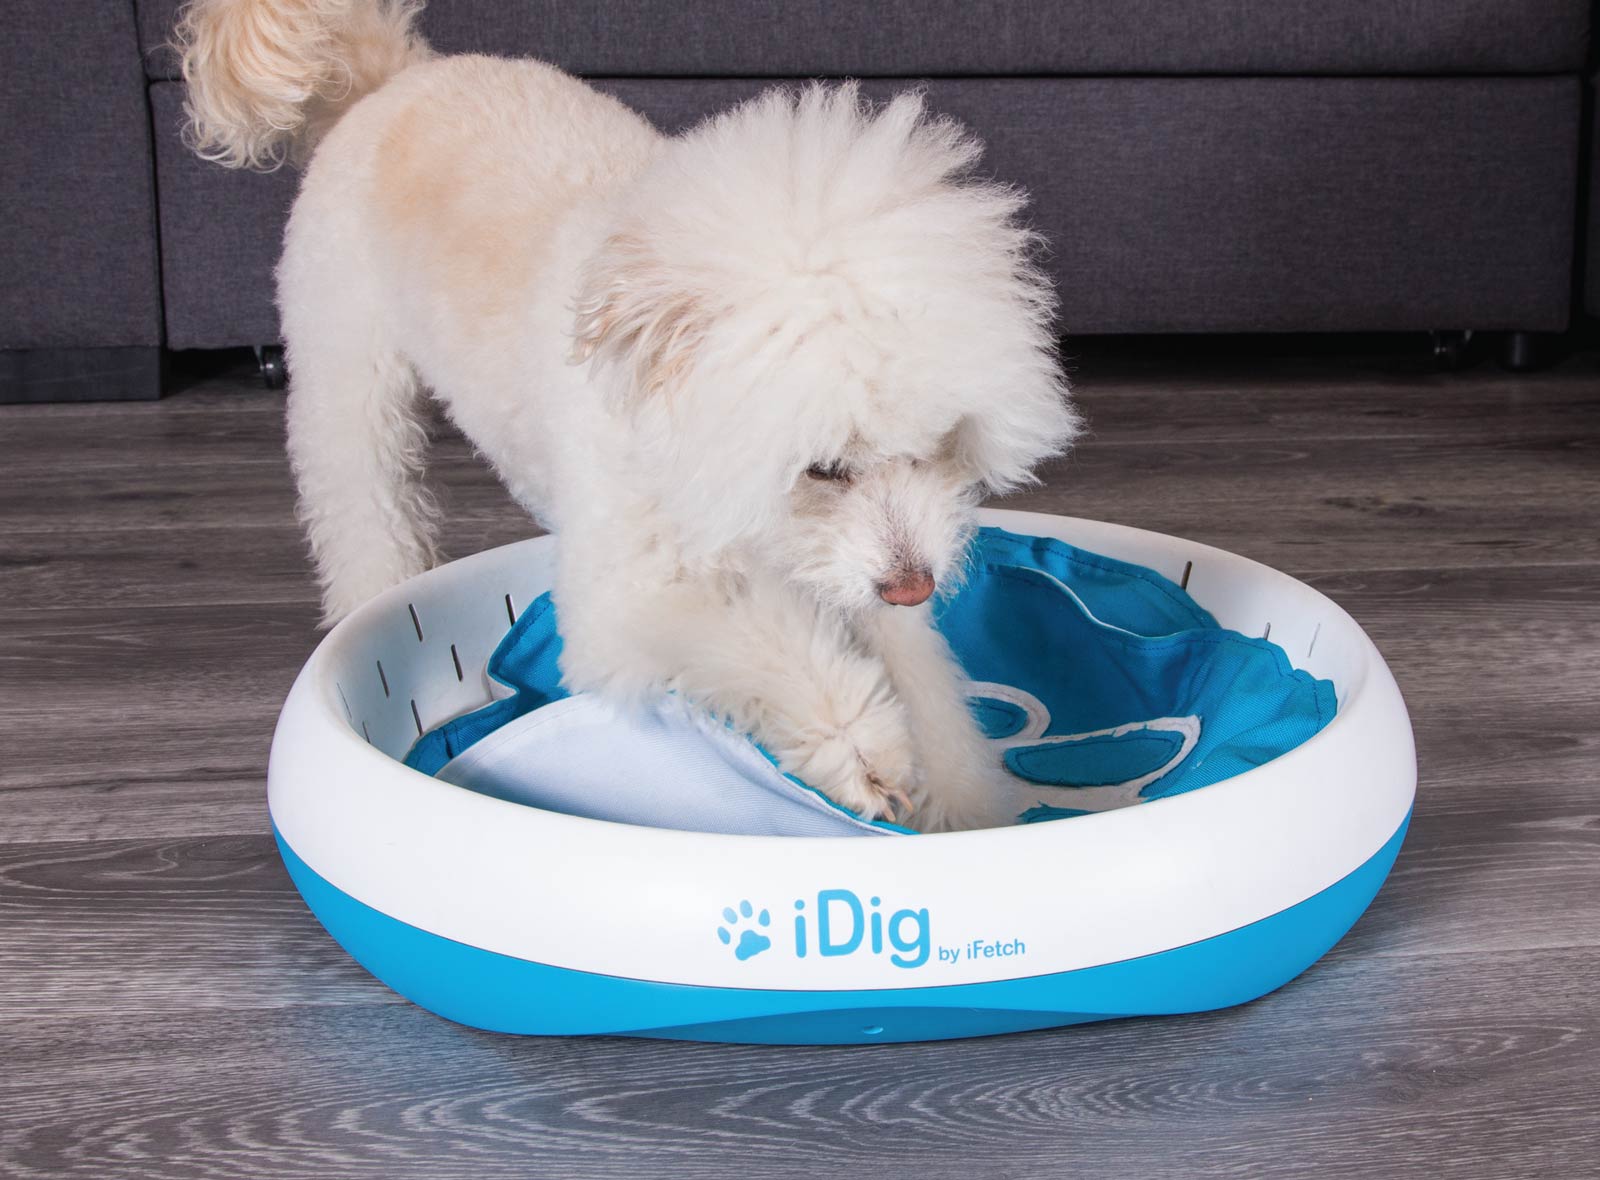 https://whatagreatdog.com/wp-content/uploads/2019/03/idig-stay-product-image-digging-dog-toy.jpg